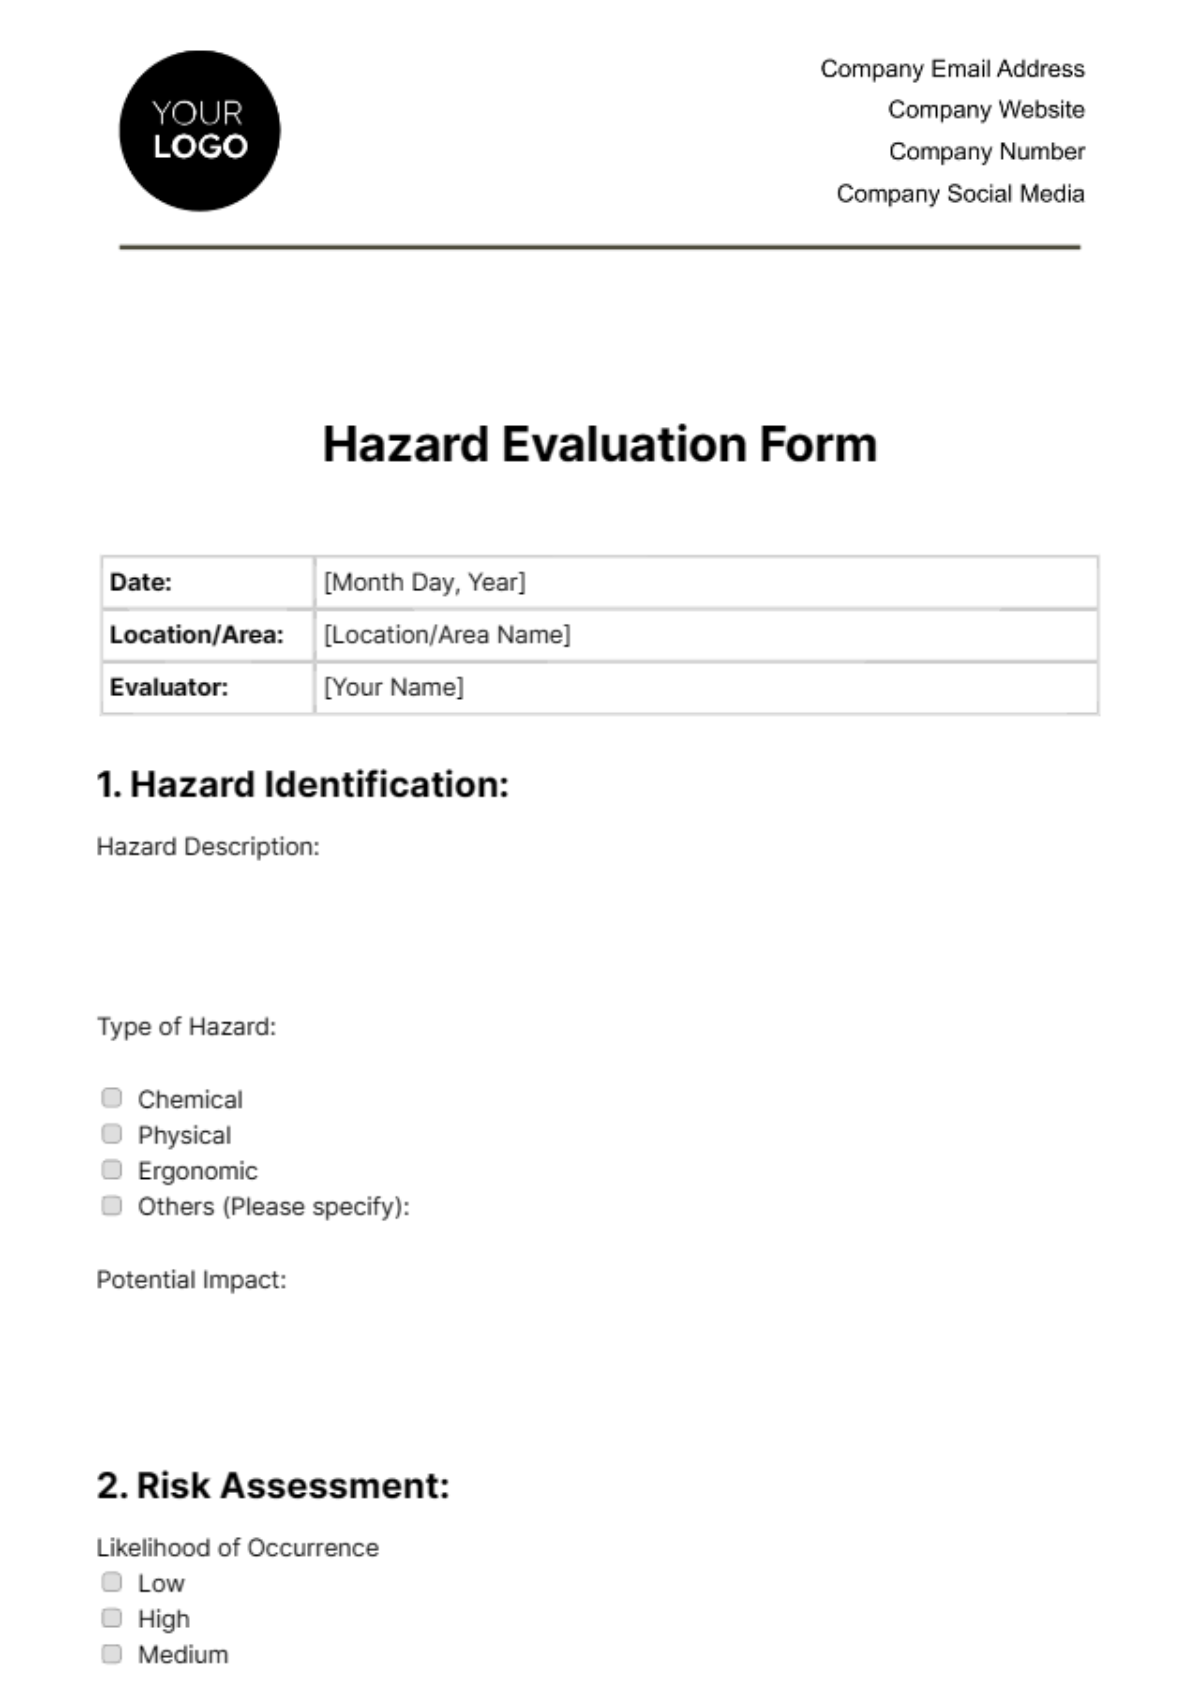 Hazard Evaluation Form Template